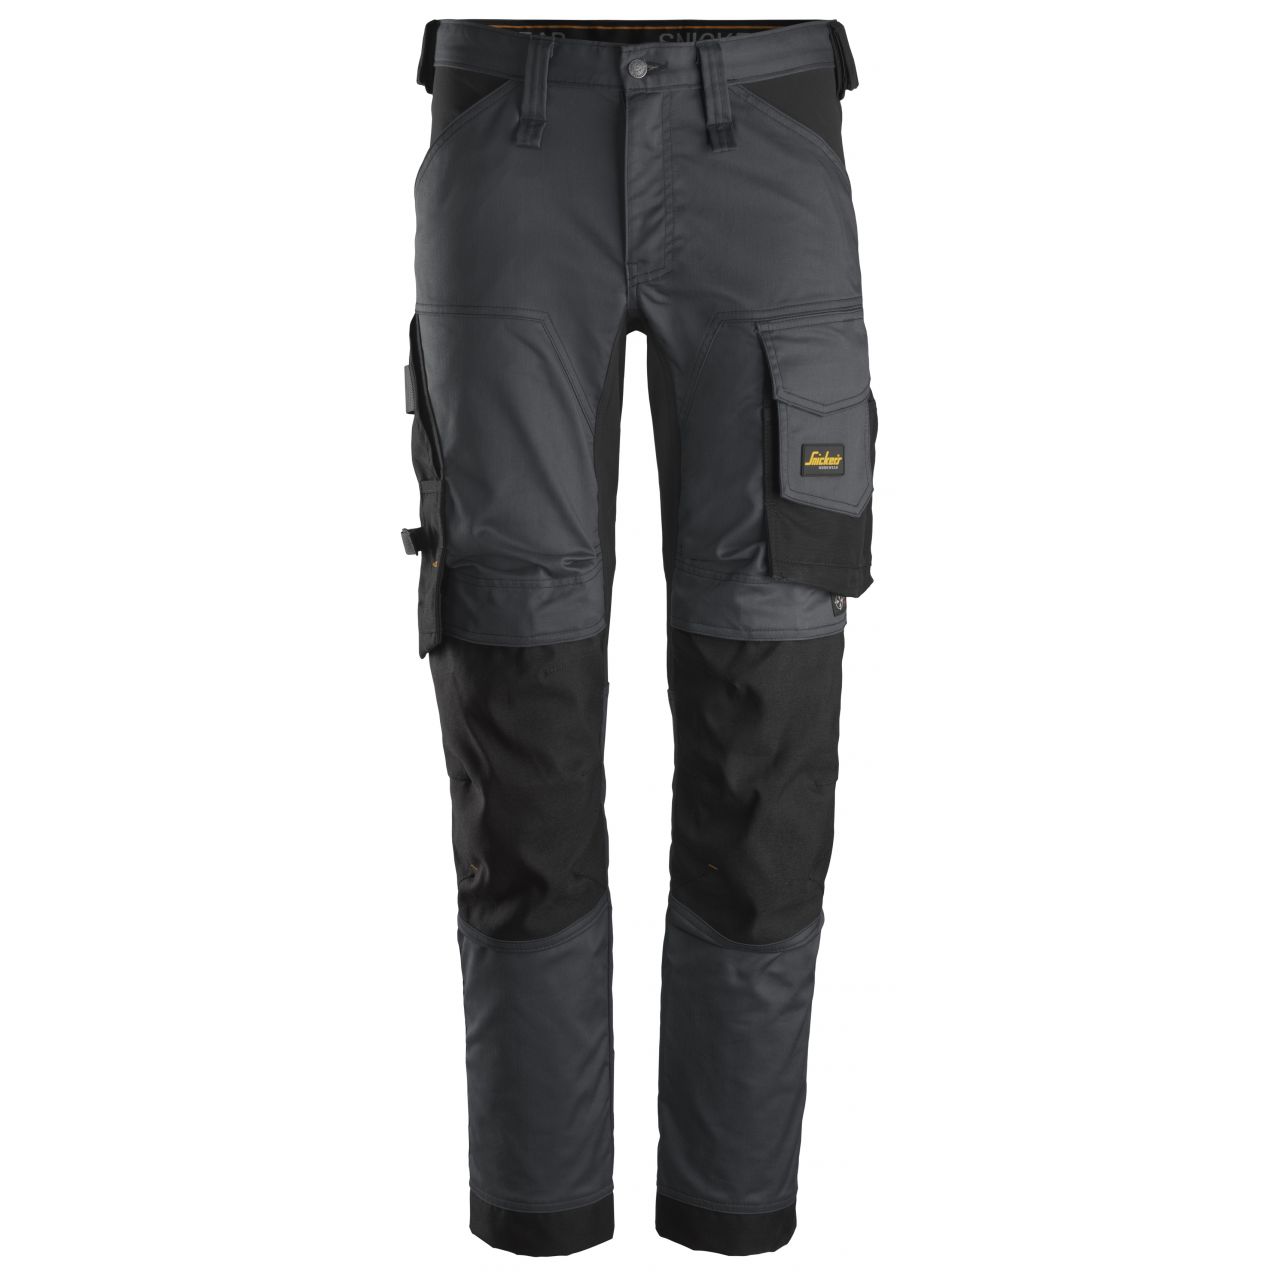 Pantalones elásticos AllroundWork Gris Acero-Negro talla 124